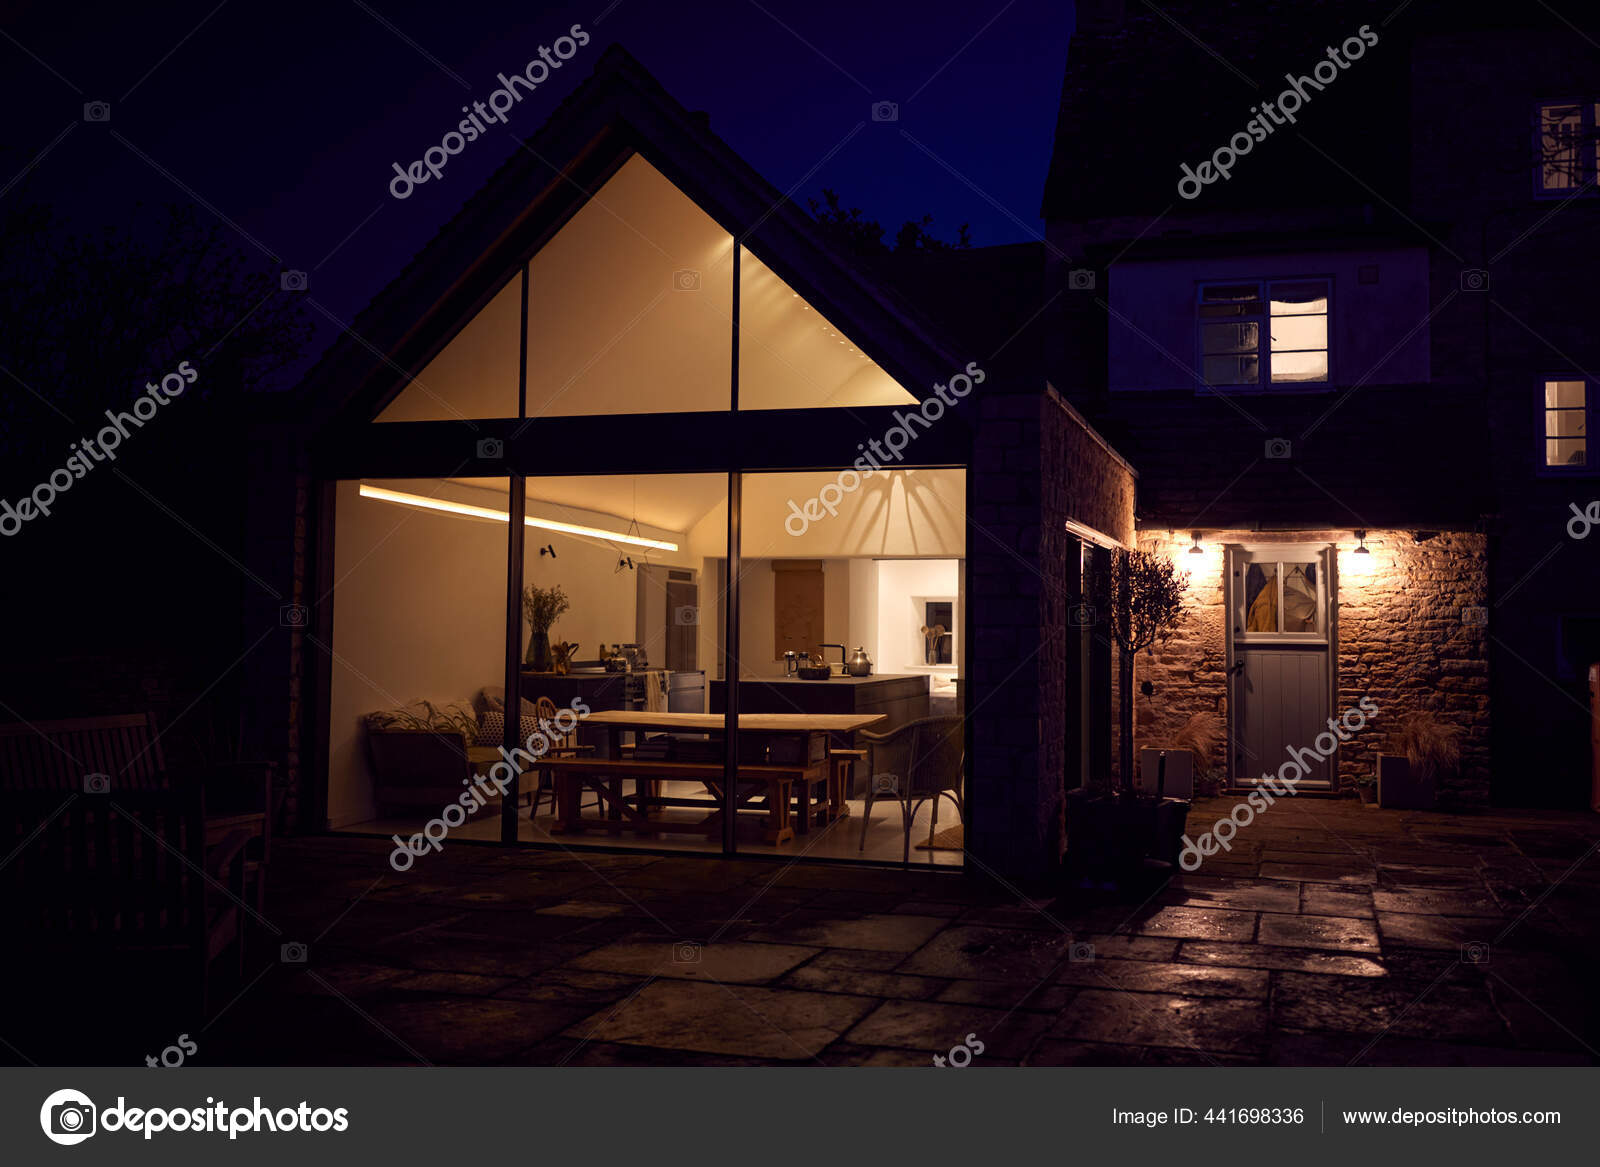 depositphotos_441698336-stock-photo-exterior-view-beautiful-kitchen-extension